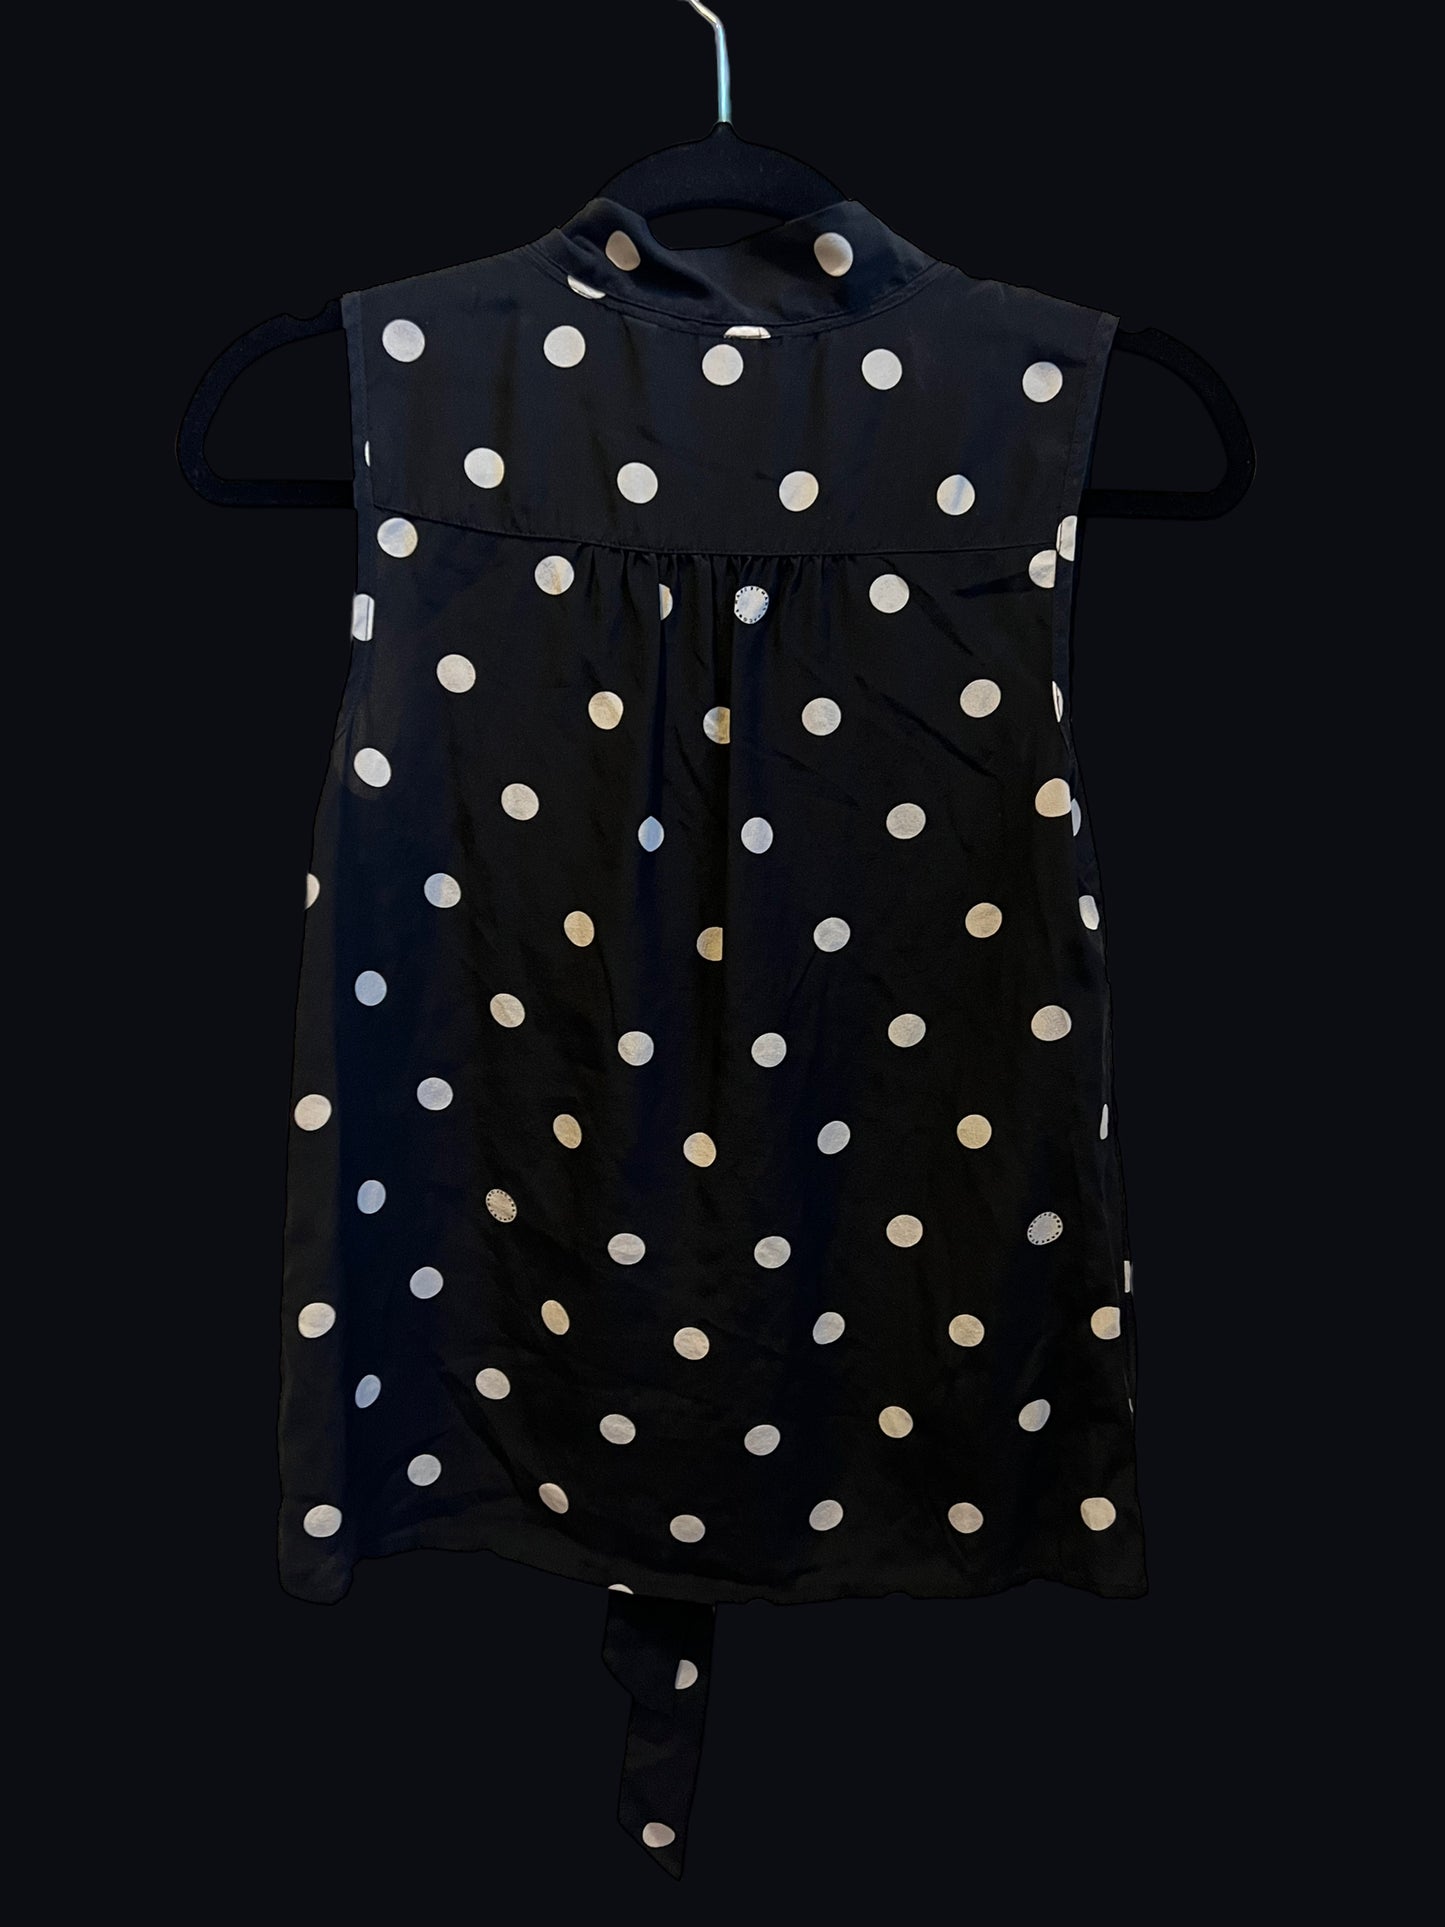 MARC BY MARC JACOBS polka dot shirt size xs